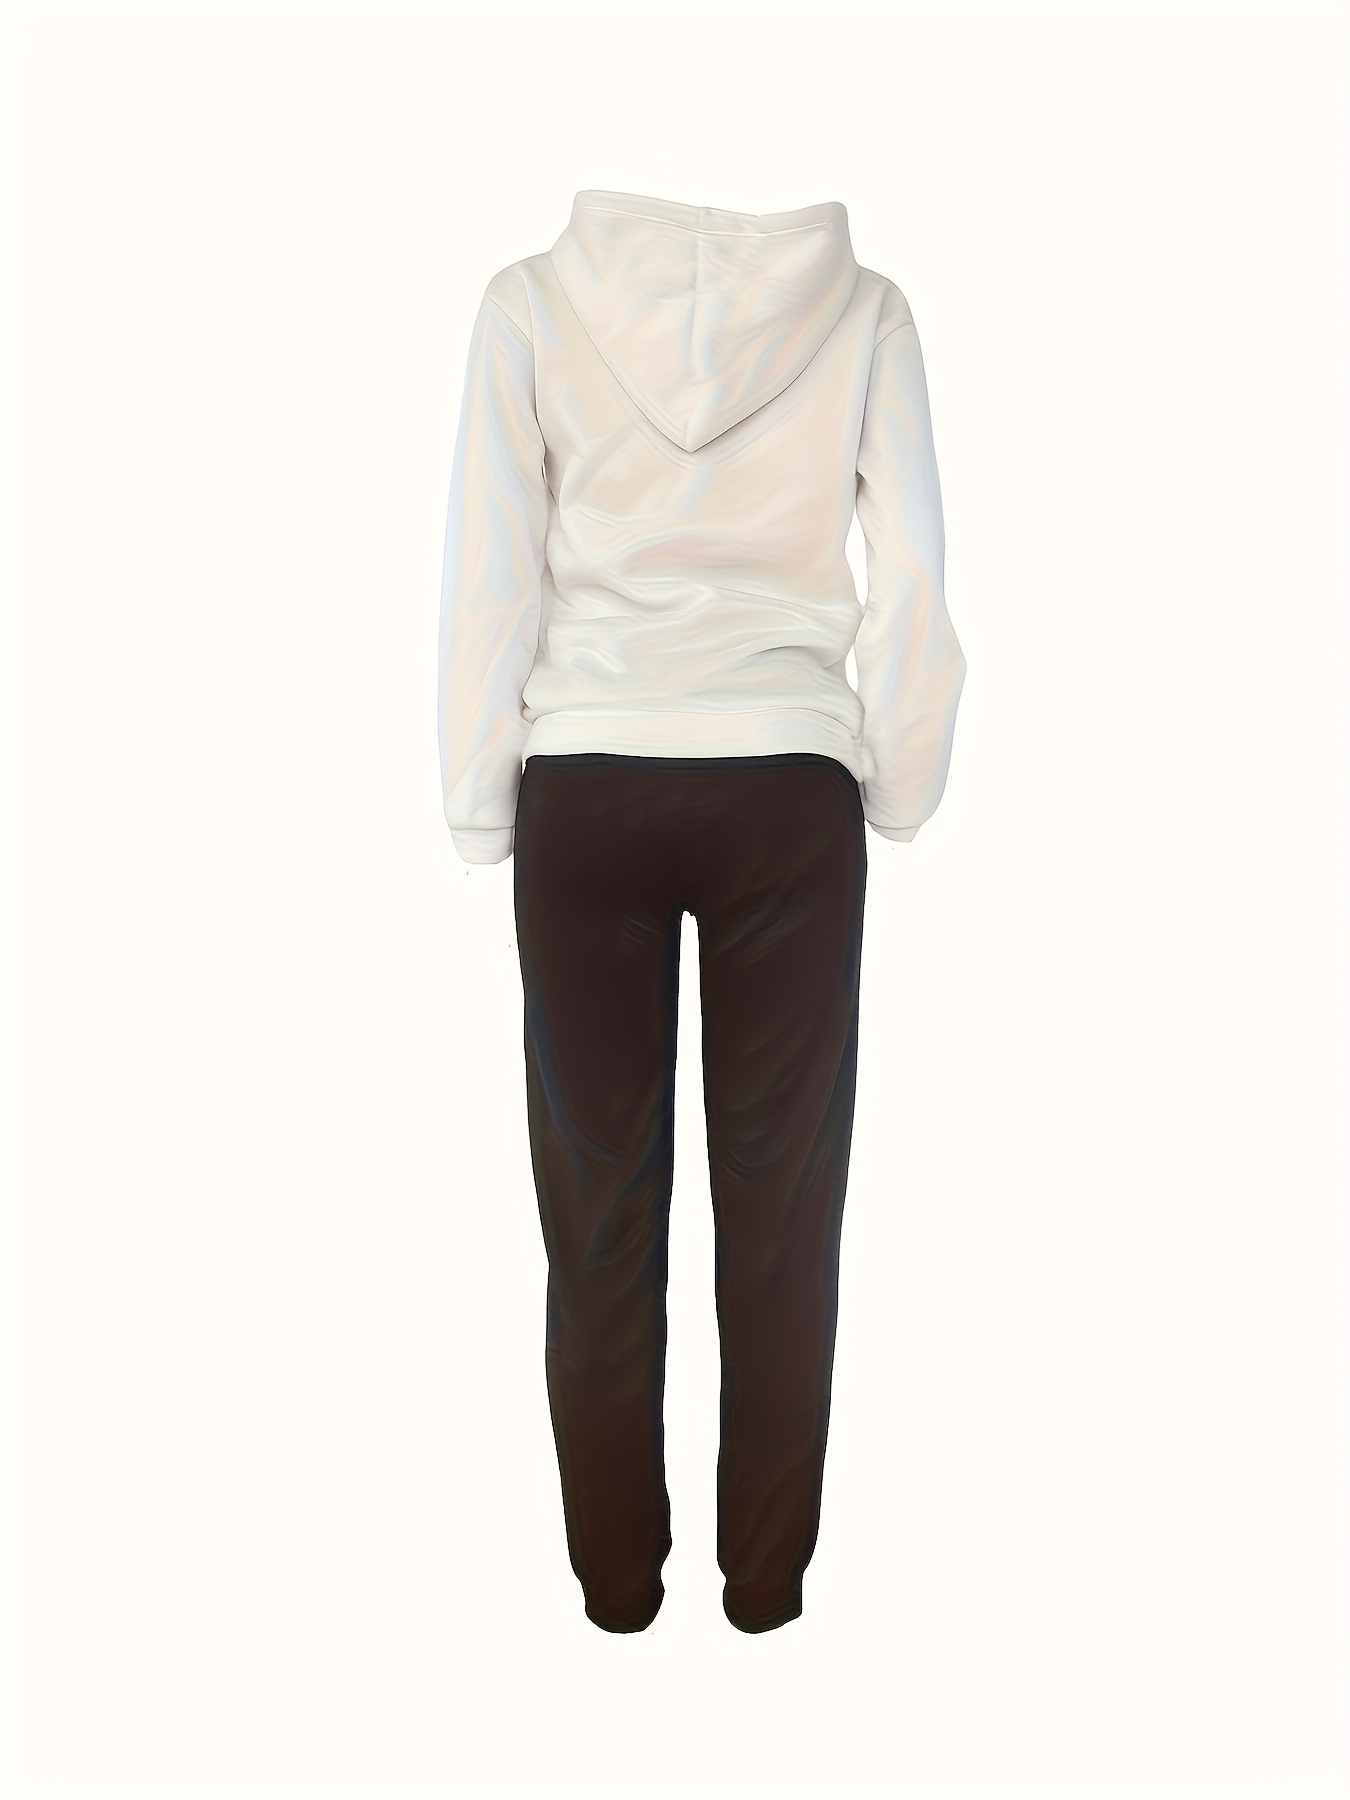 Women's White Mark 2-piece Velour Hoodie & Jogger Pants Set